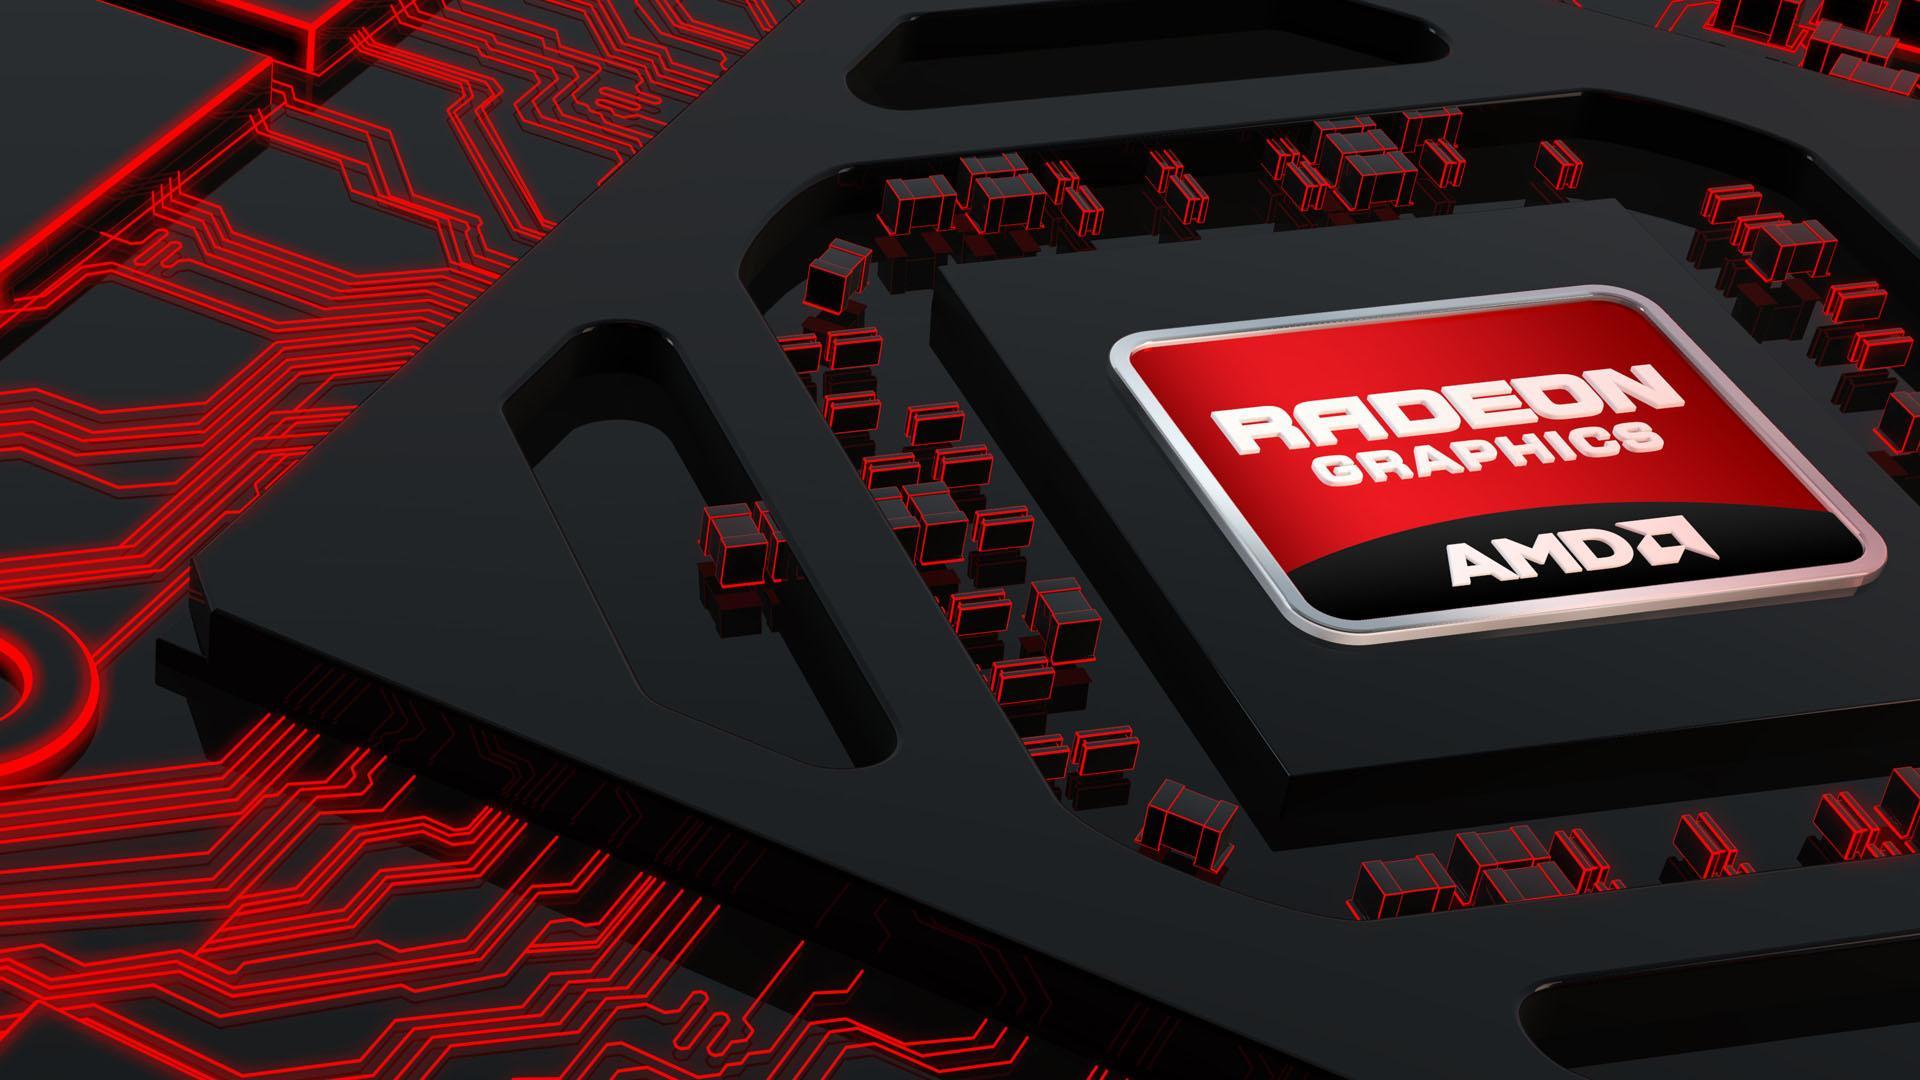 Tabela comparativa dos chips Radeon da AMD (desktop)